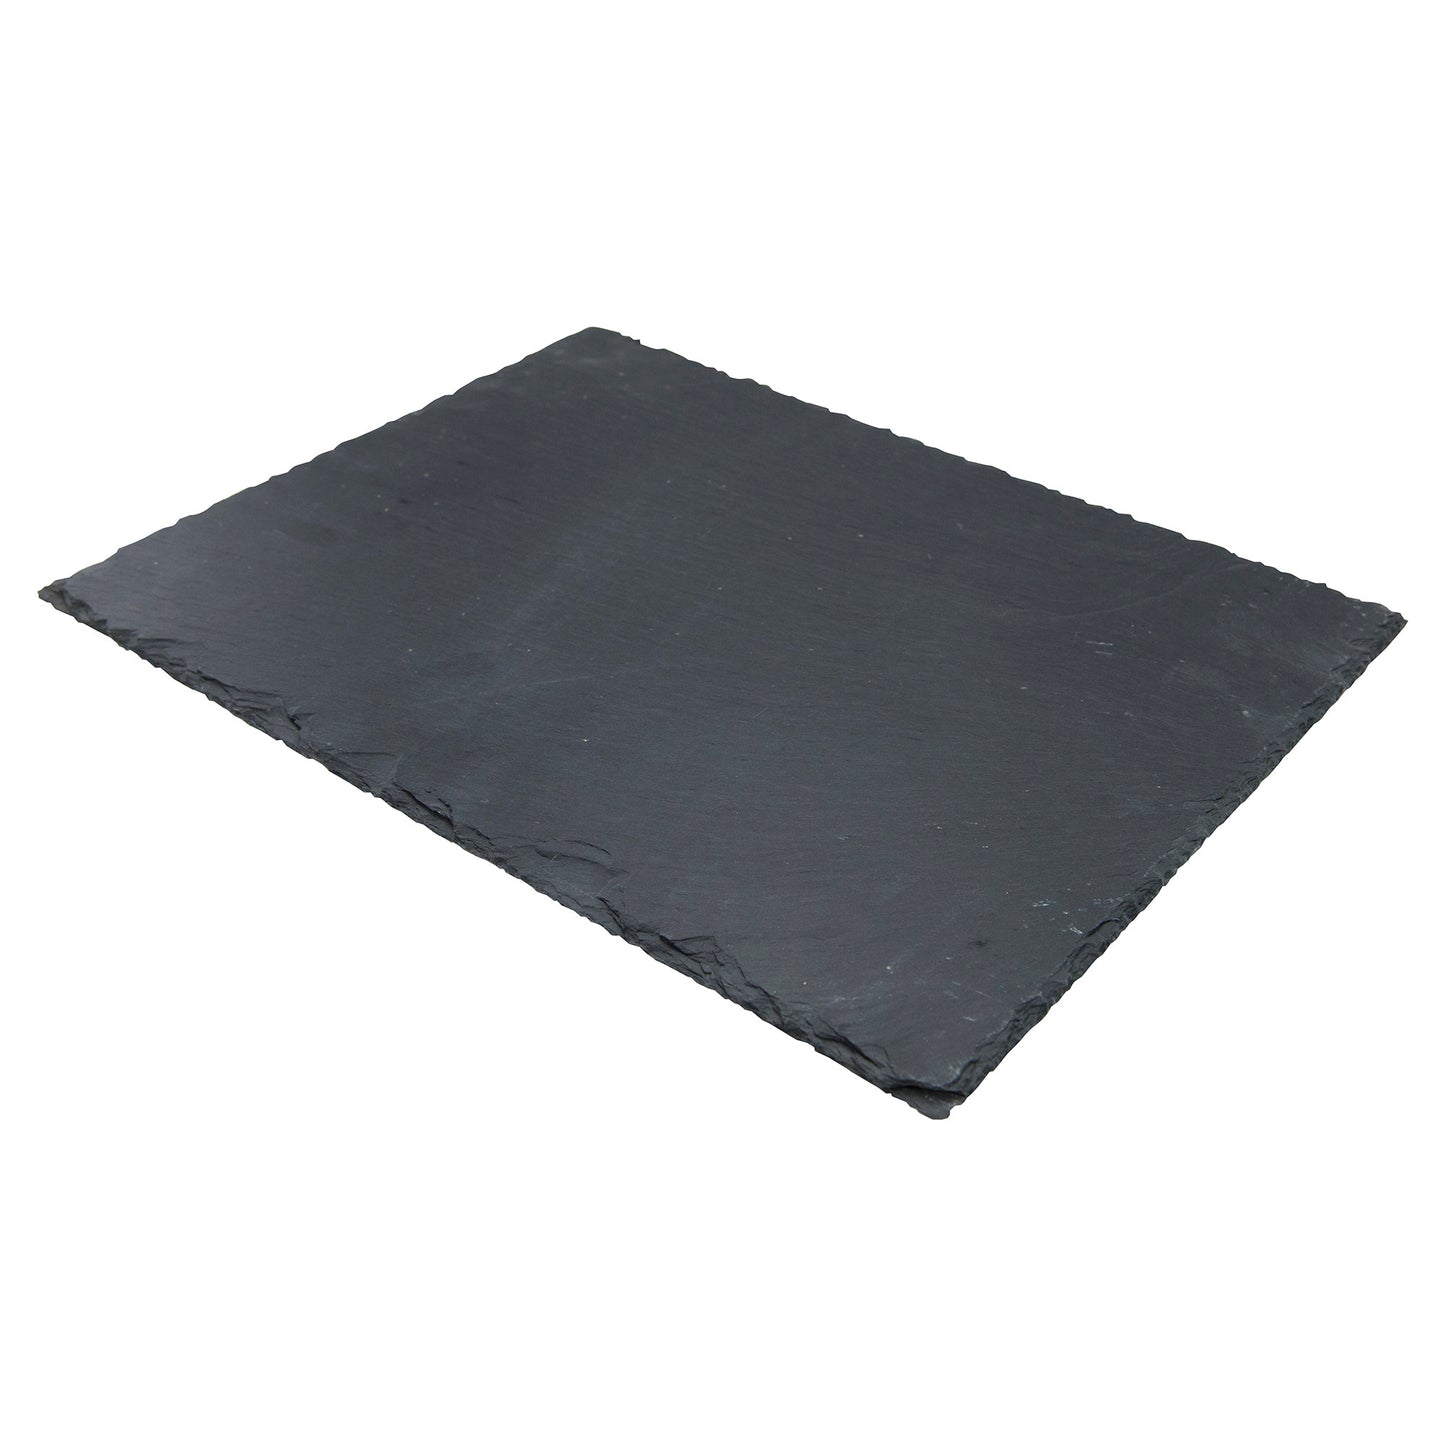 WDL001-303 - Tavo Slate Rectangular Platter - 15-3/4" x 11-1/2"